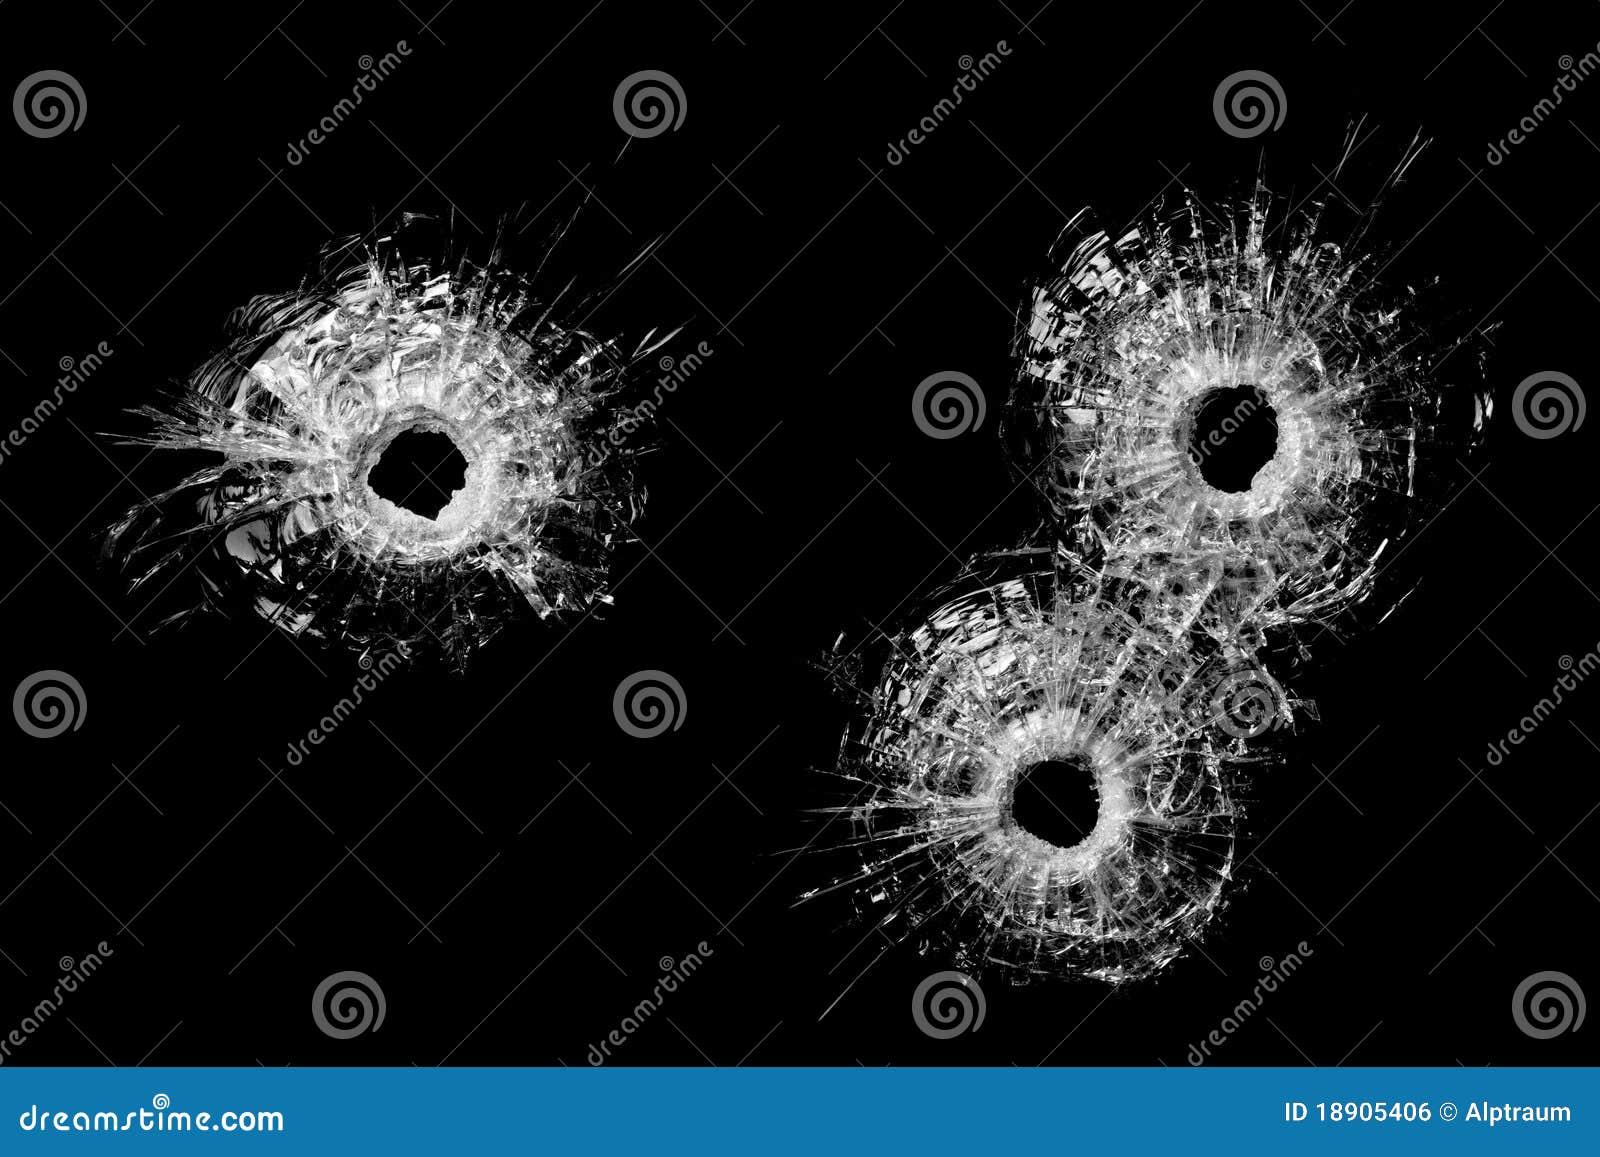 bullet holes in glass  on black